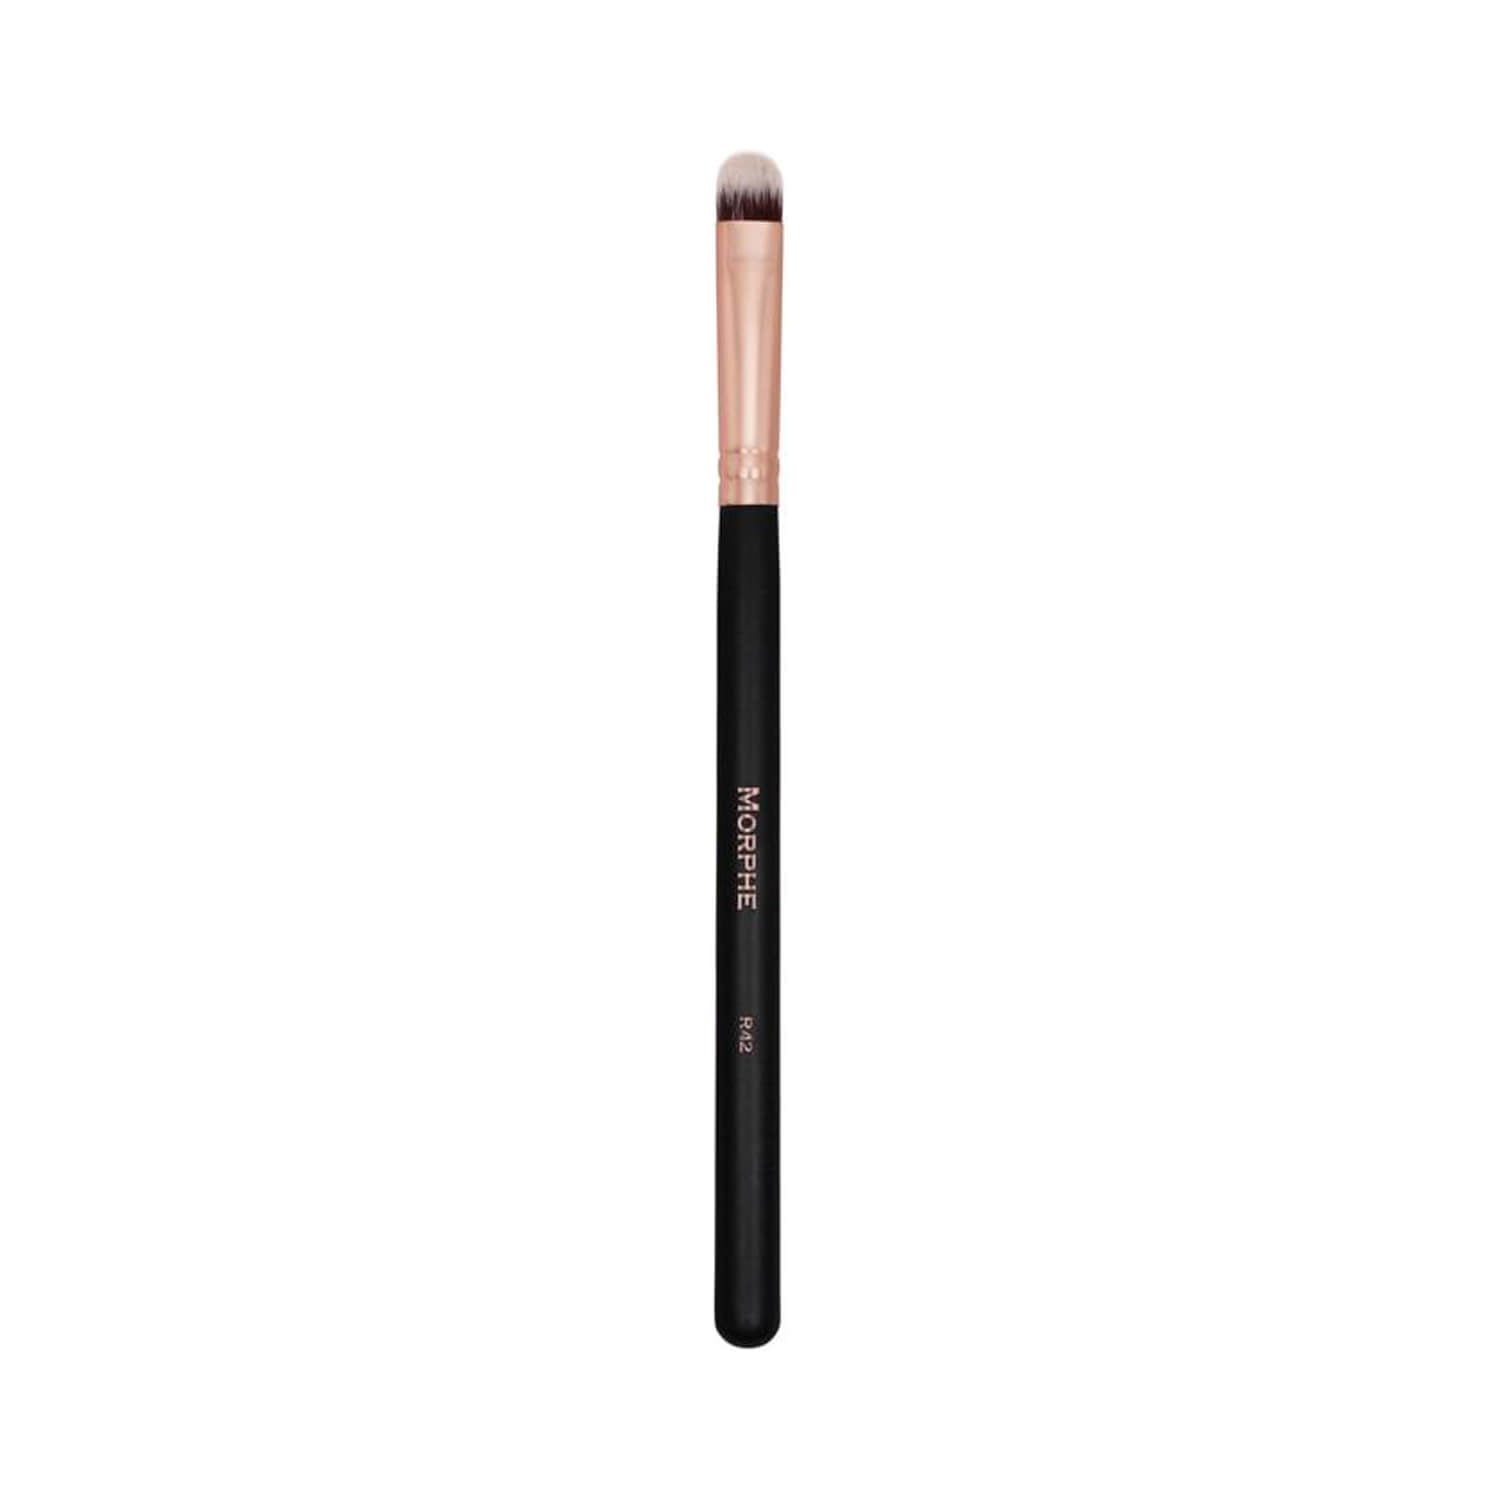 Morphe Cosmetics R42 Oval Shadow/Concealer Brush